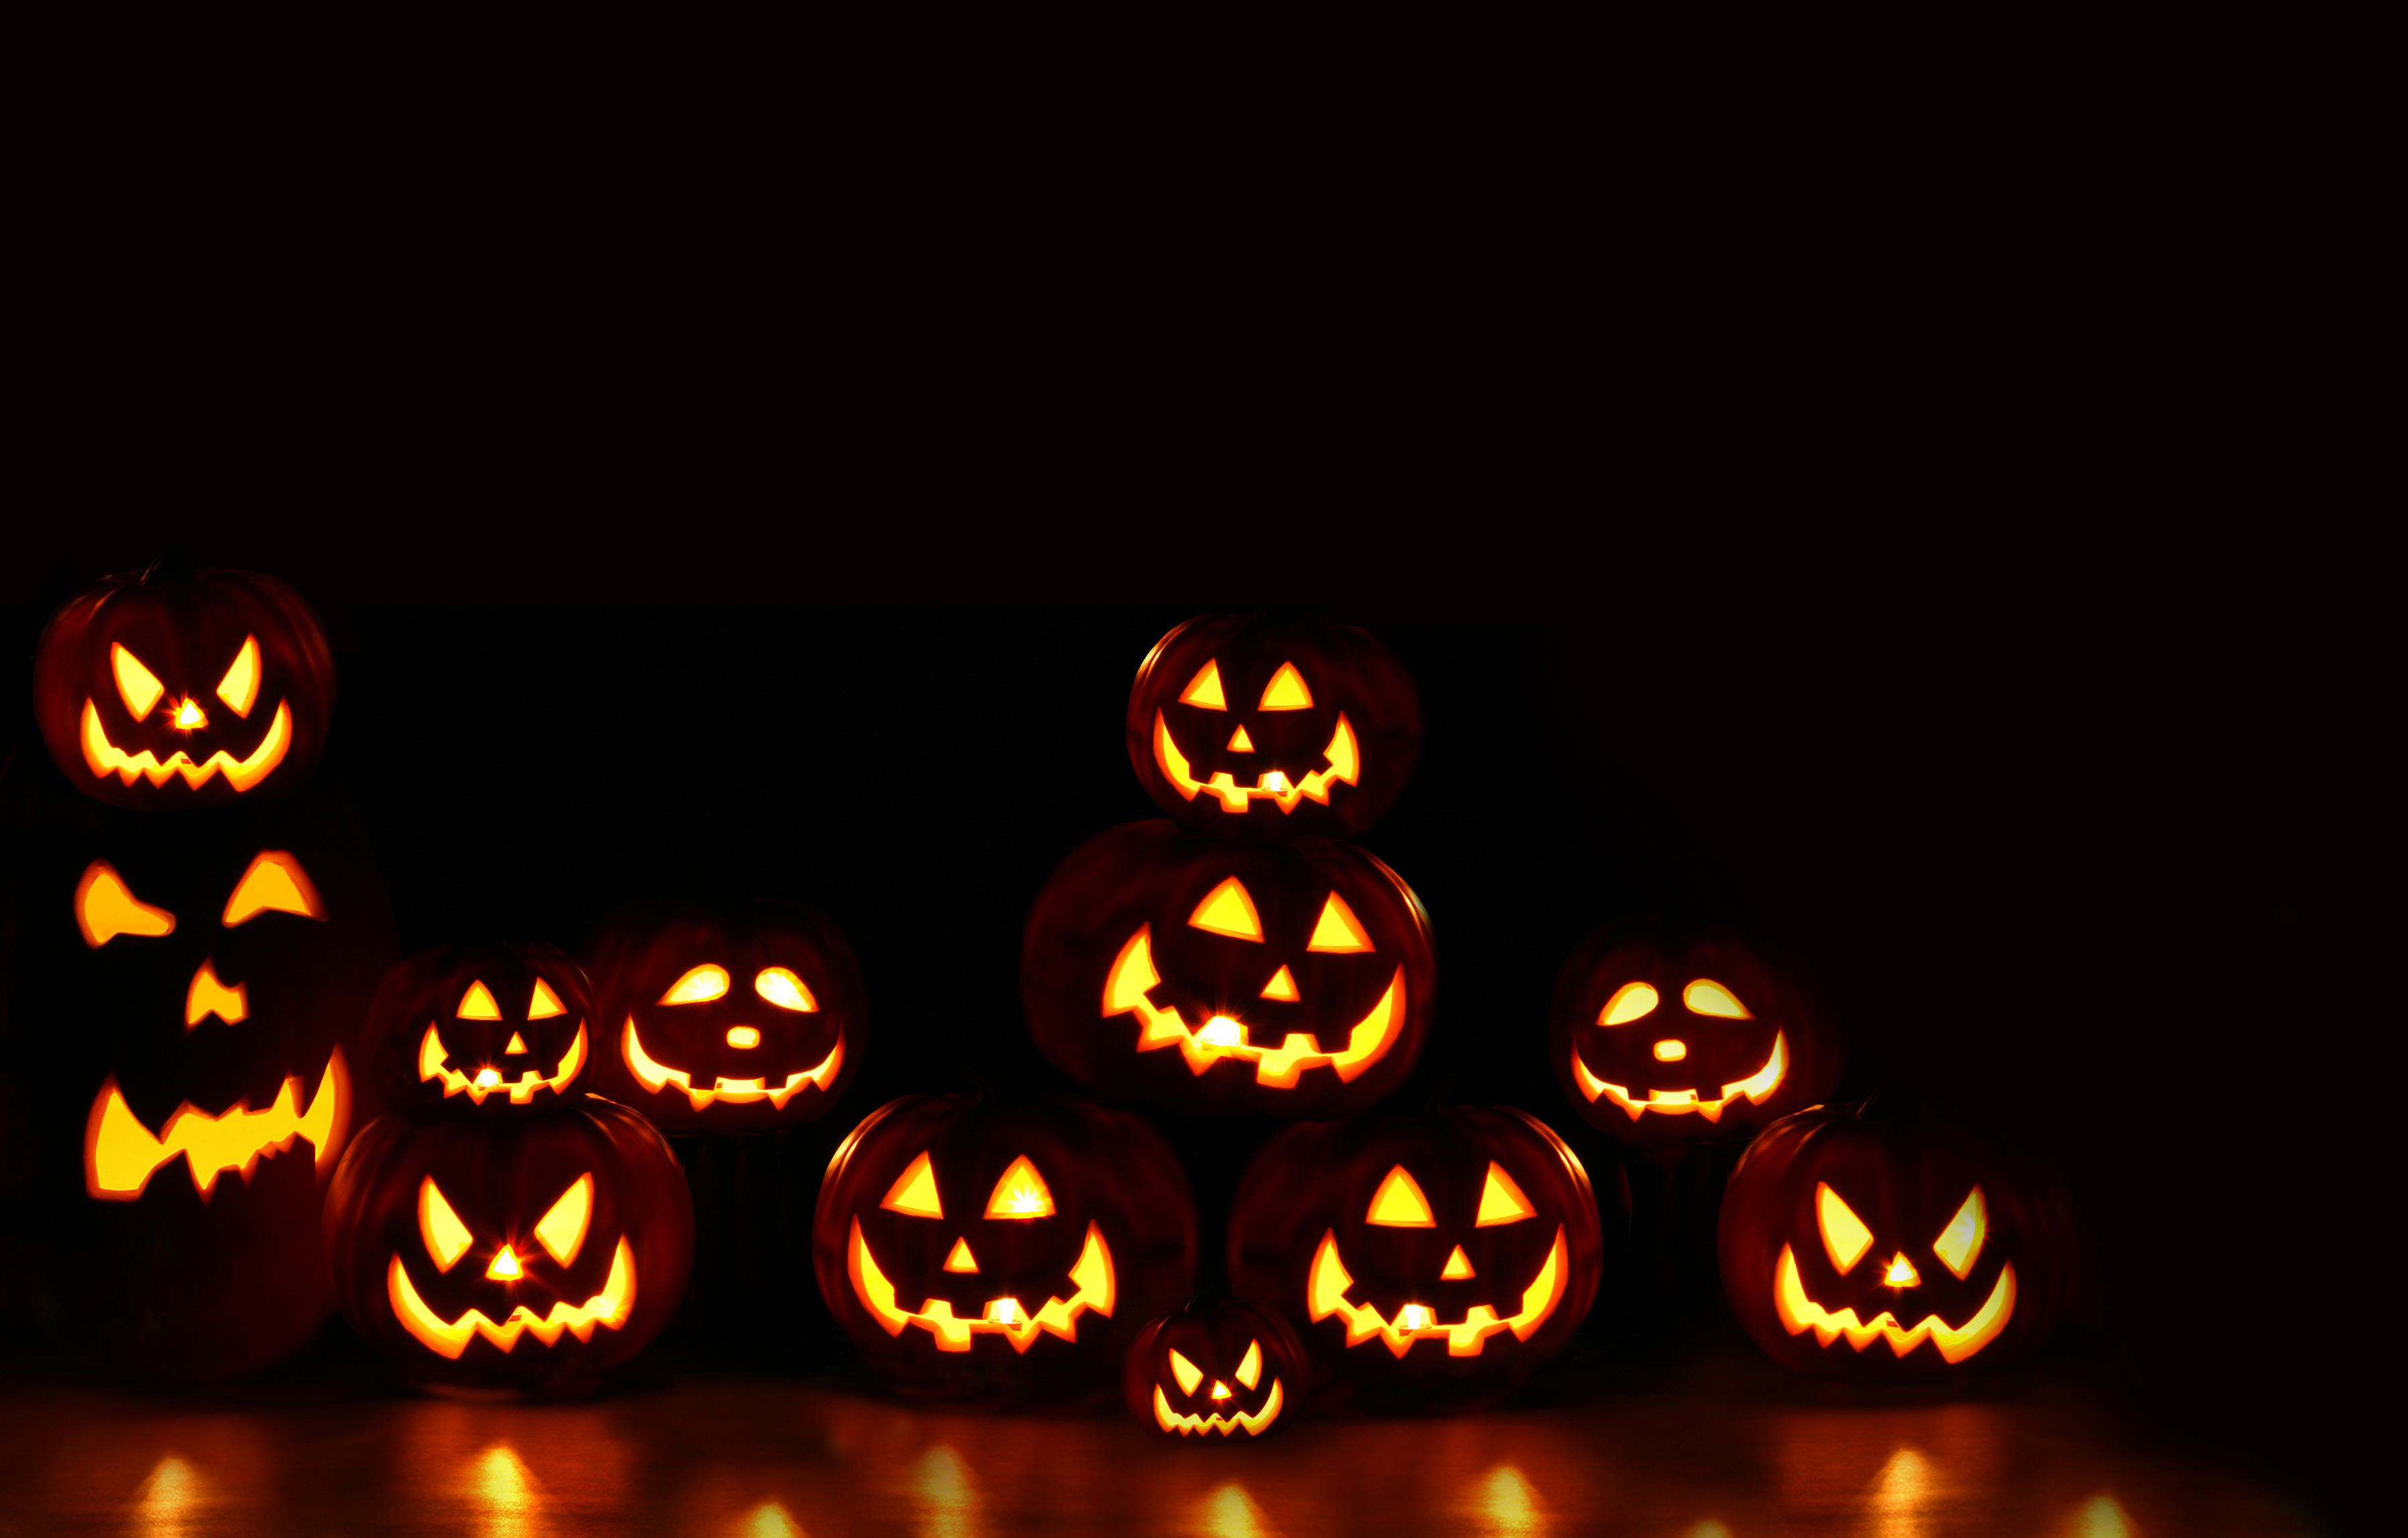 Halloween scary spooky cemetery pumpkins wallpaper